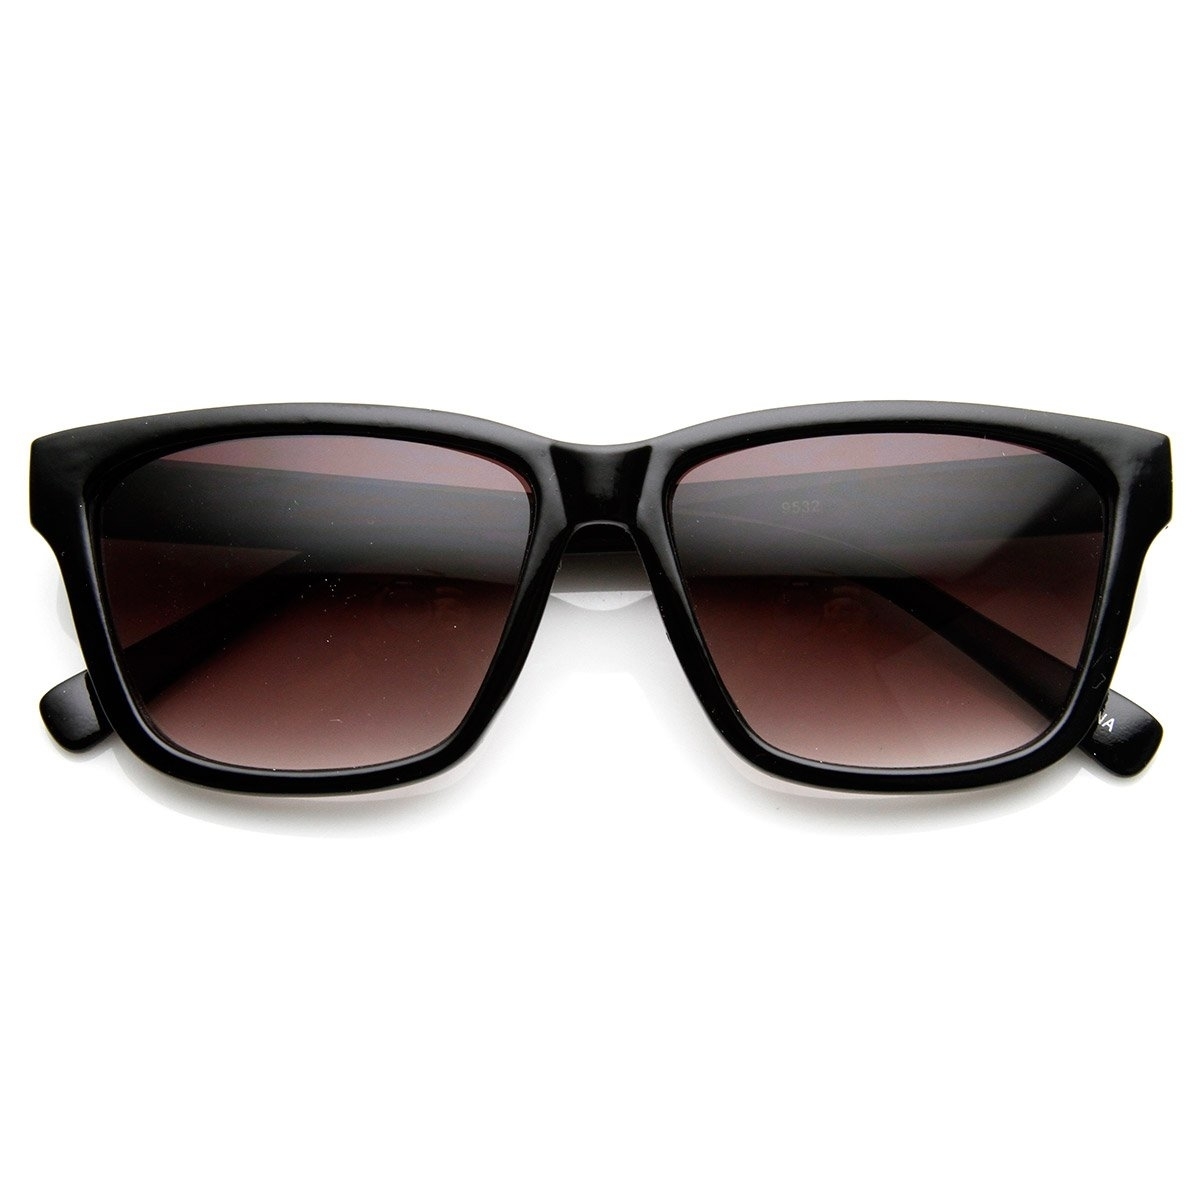 Retro Fashion Modified Squared Frame Horn Rimmed Sunglasses - Tortoise